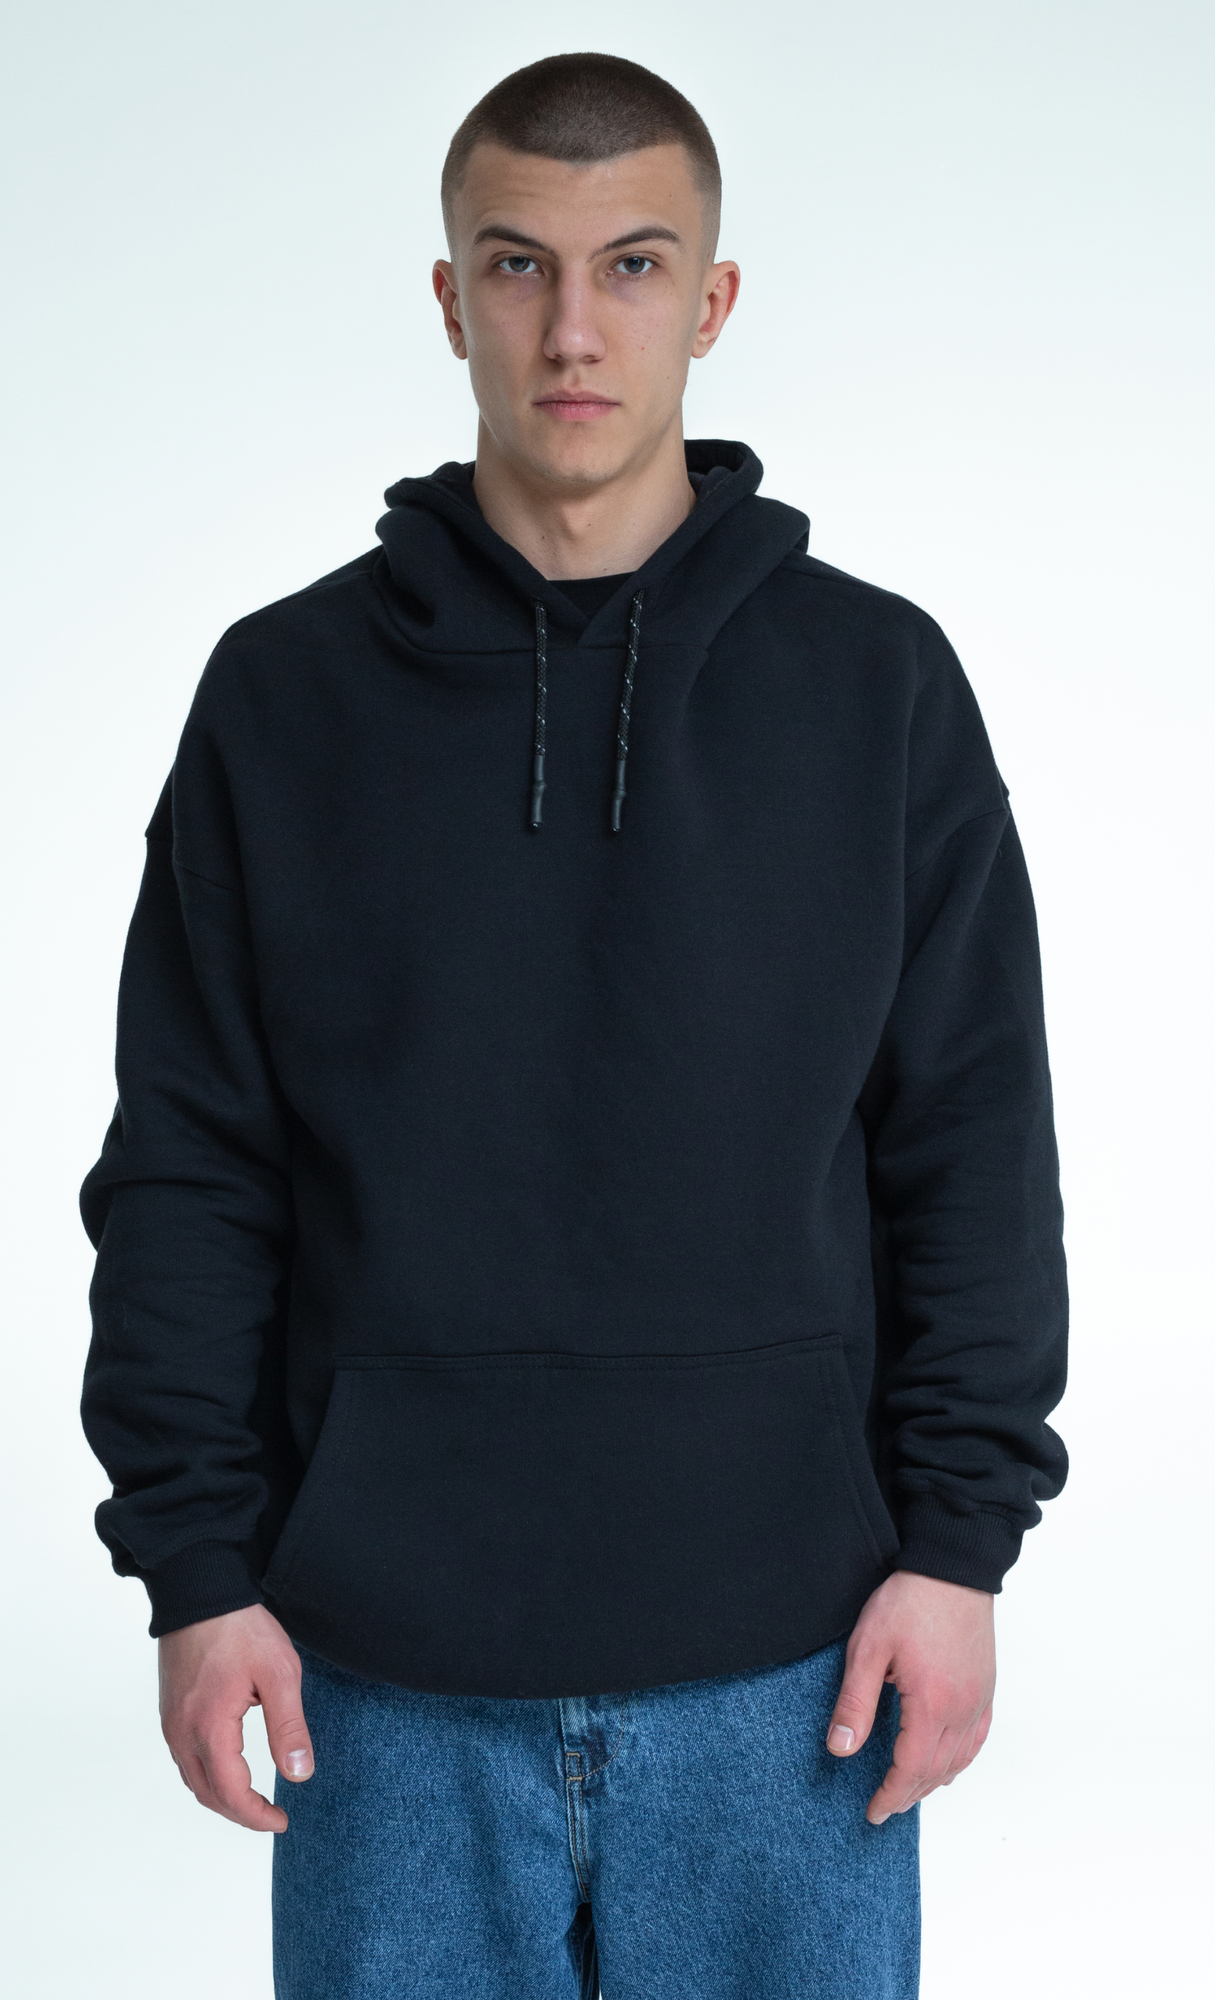 Bezlad hoodie basic black two